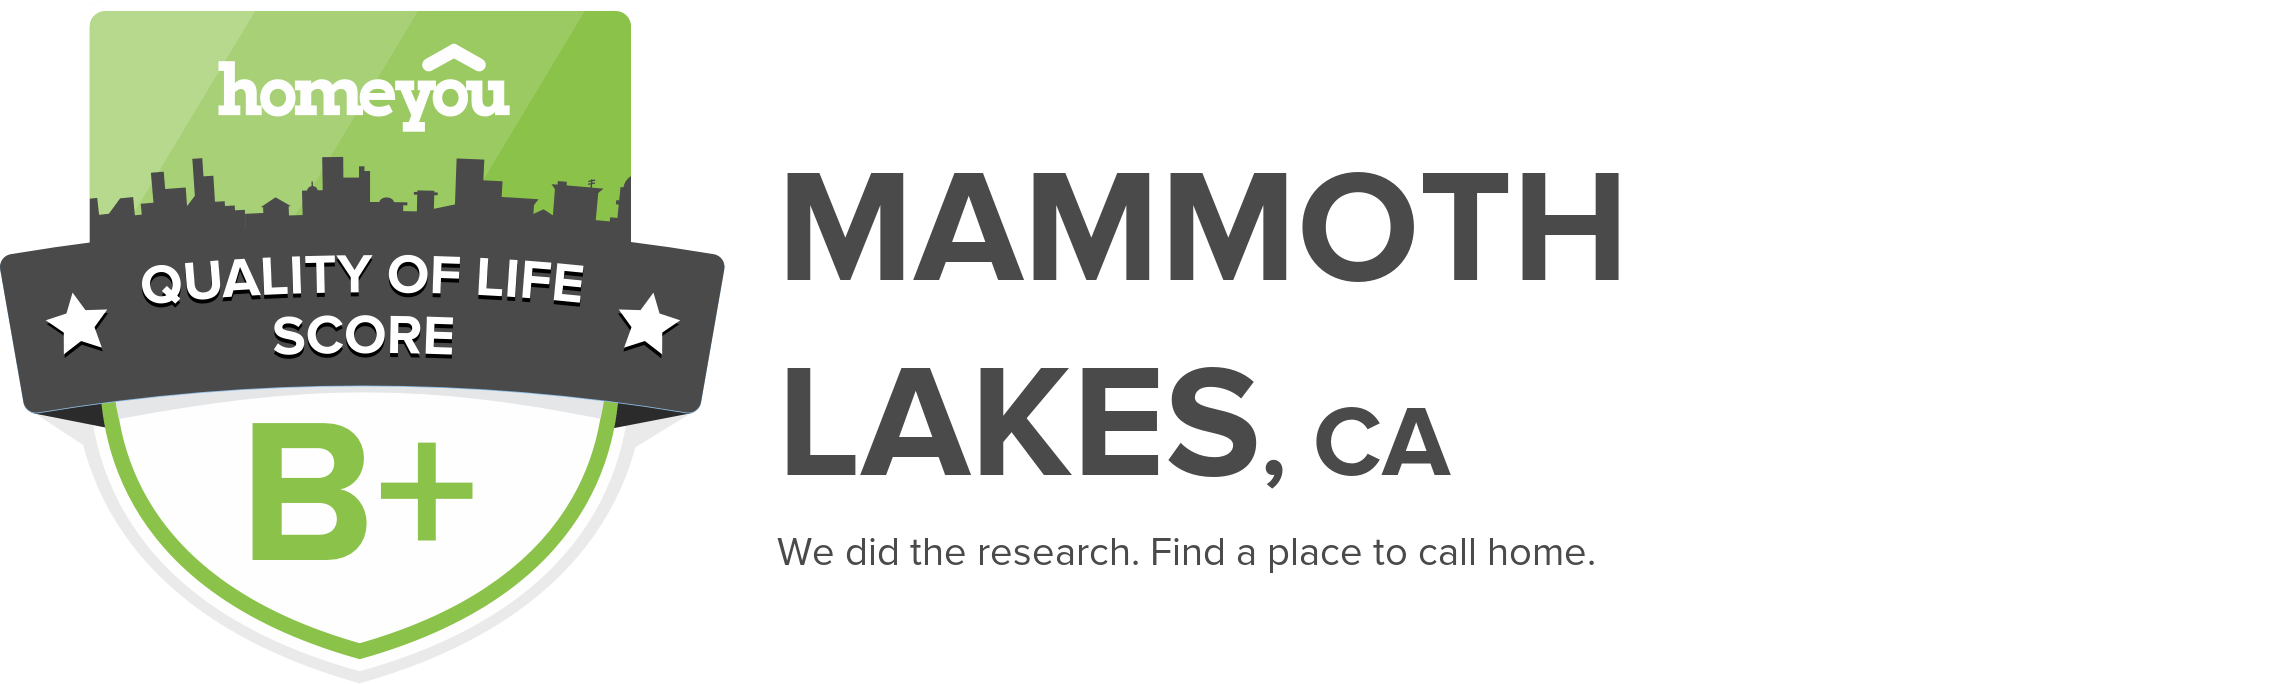 Mammoth Lakes, CA